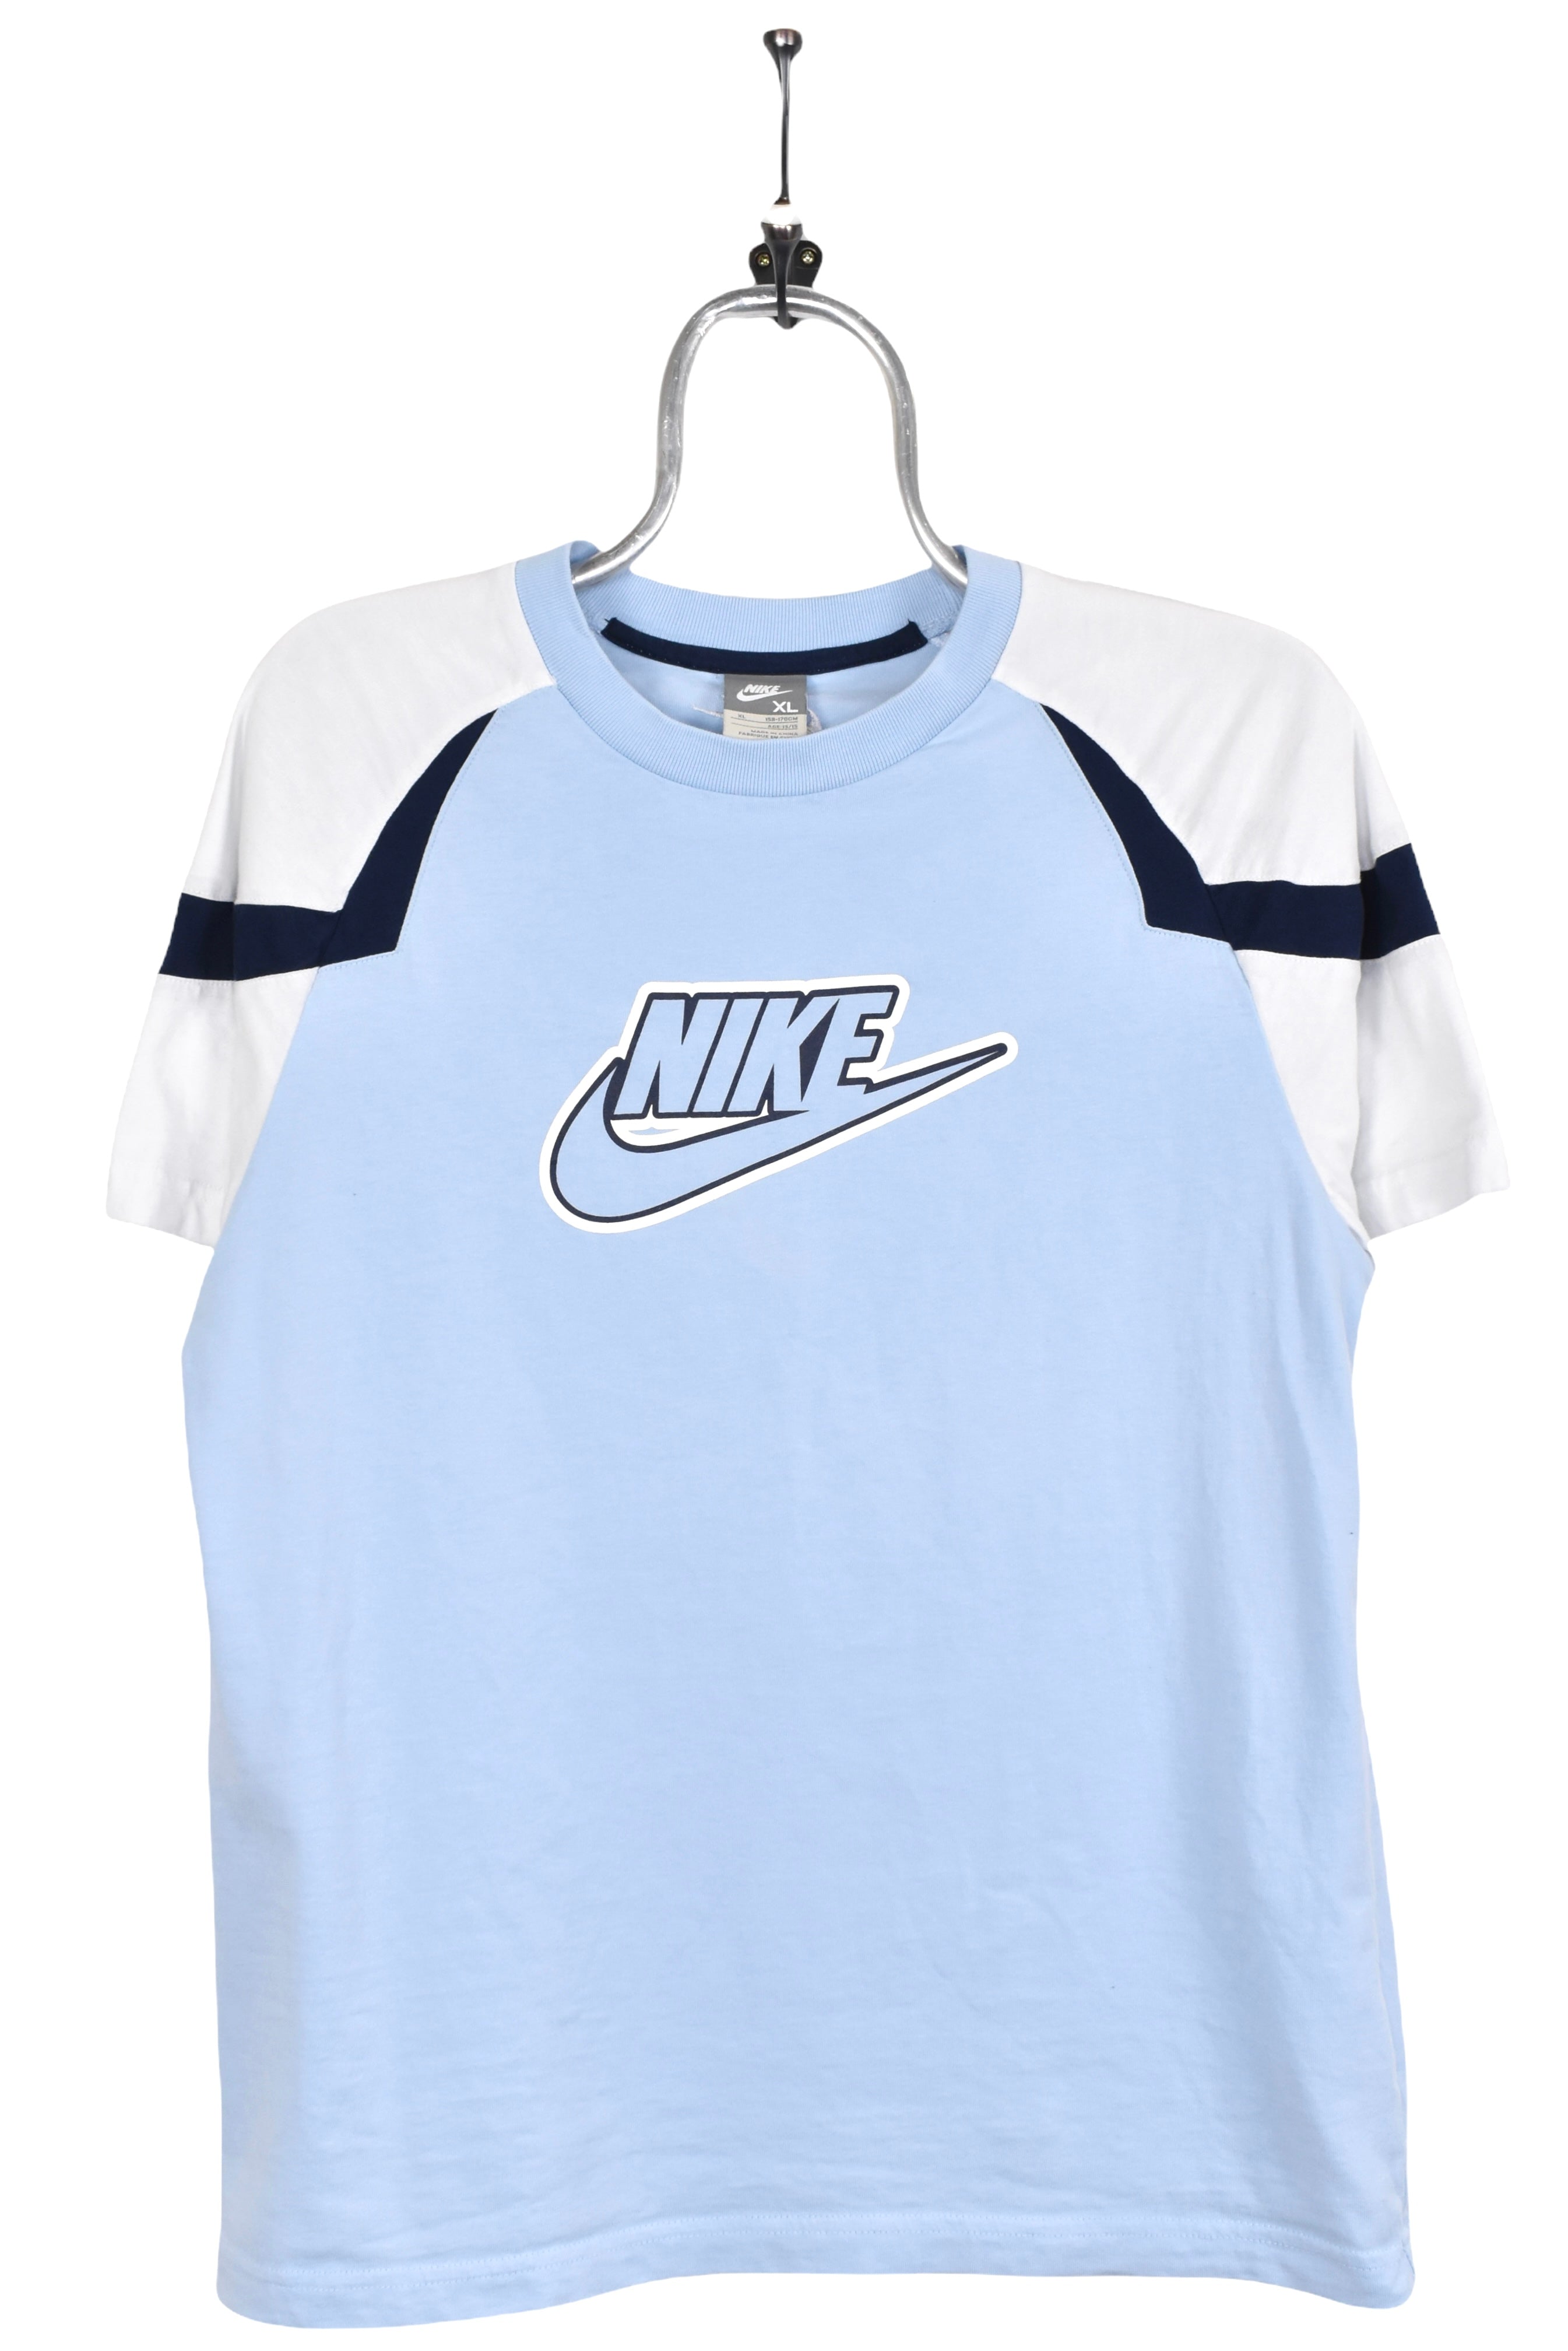 Vintage Nike shirt, blue graphic tee - AU S NIKE